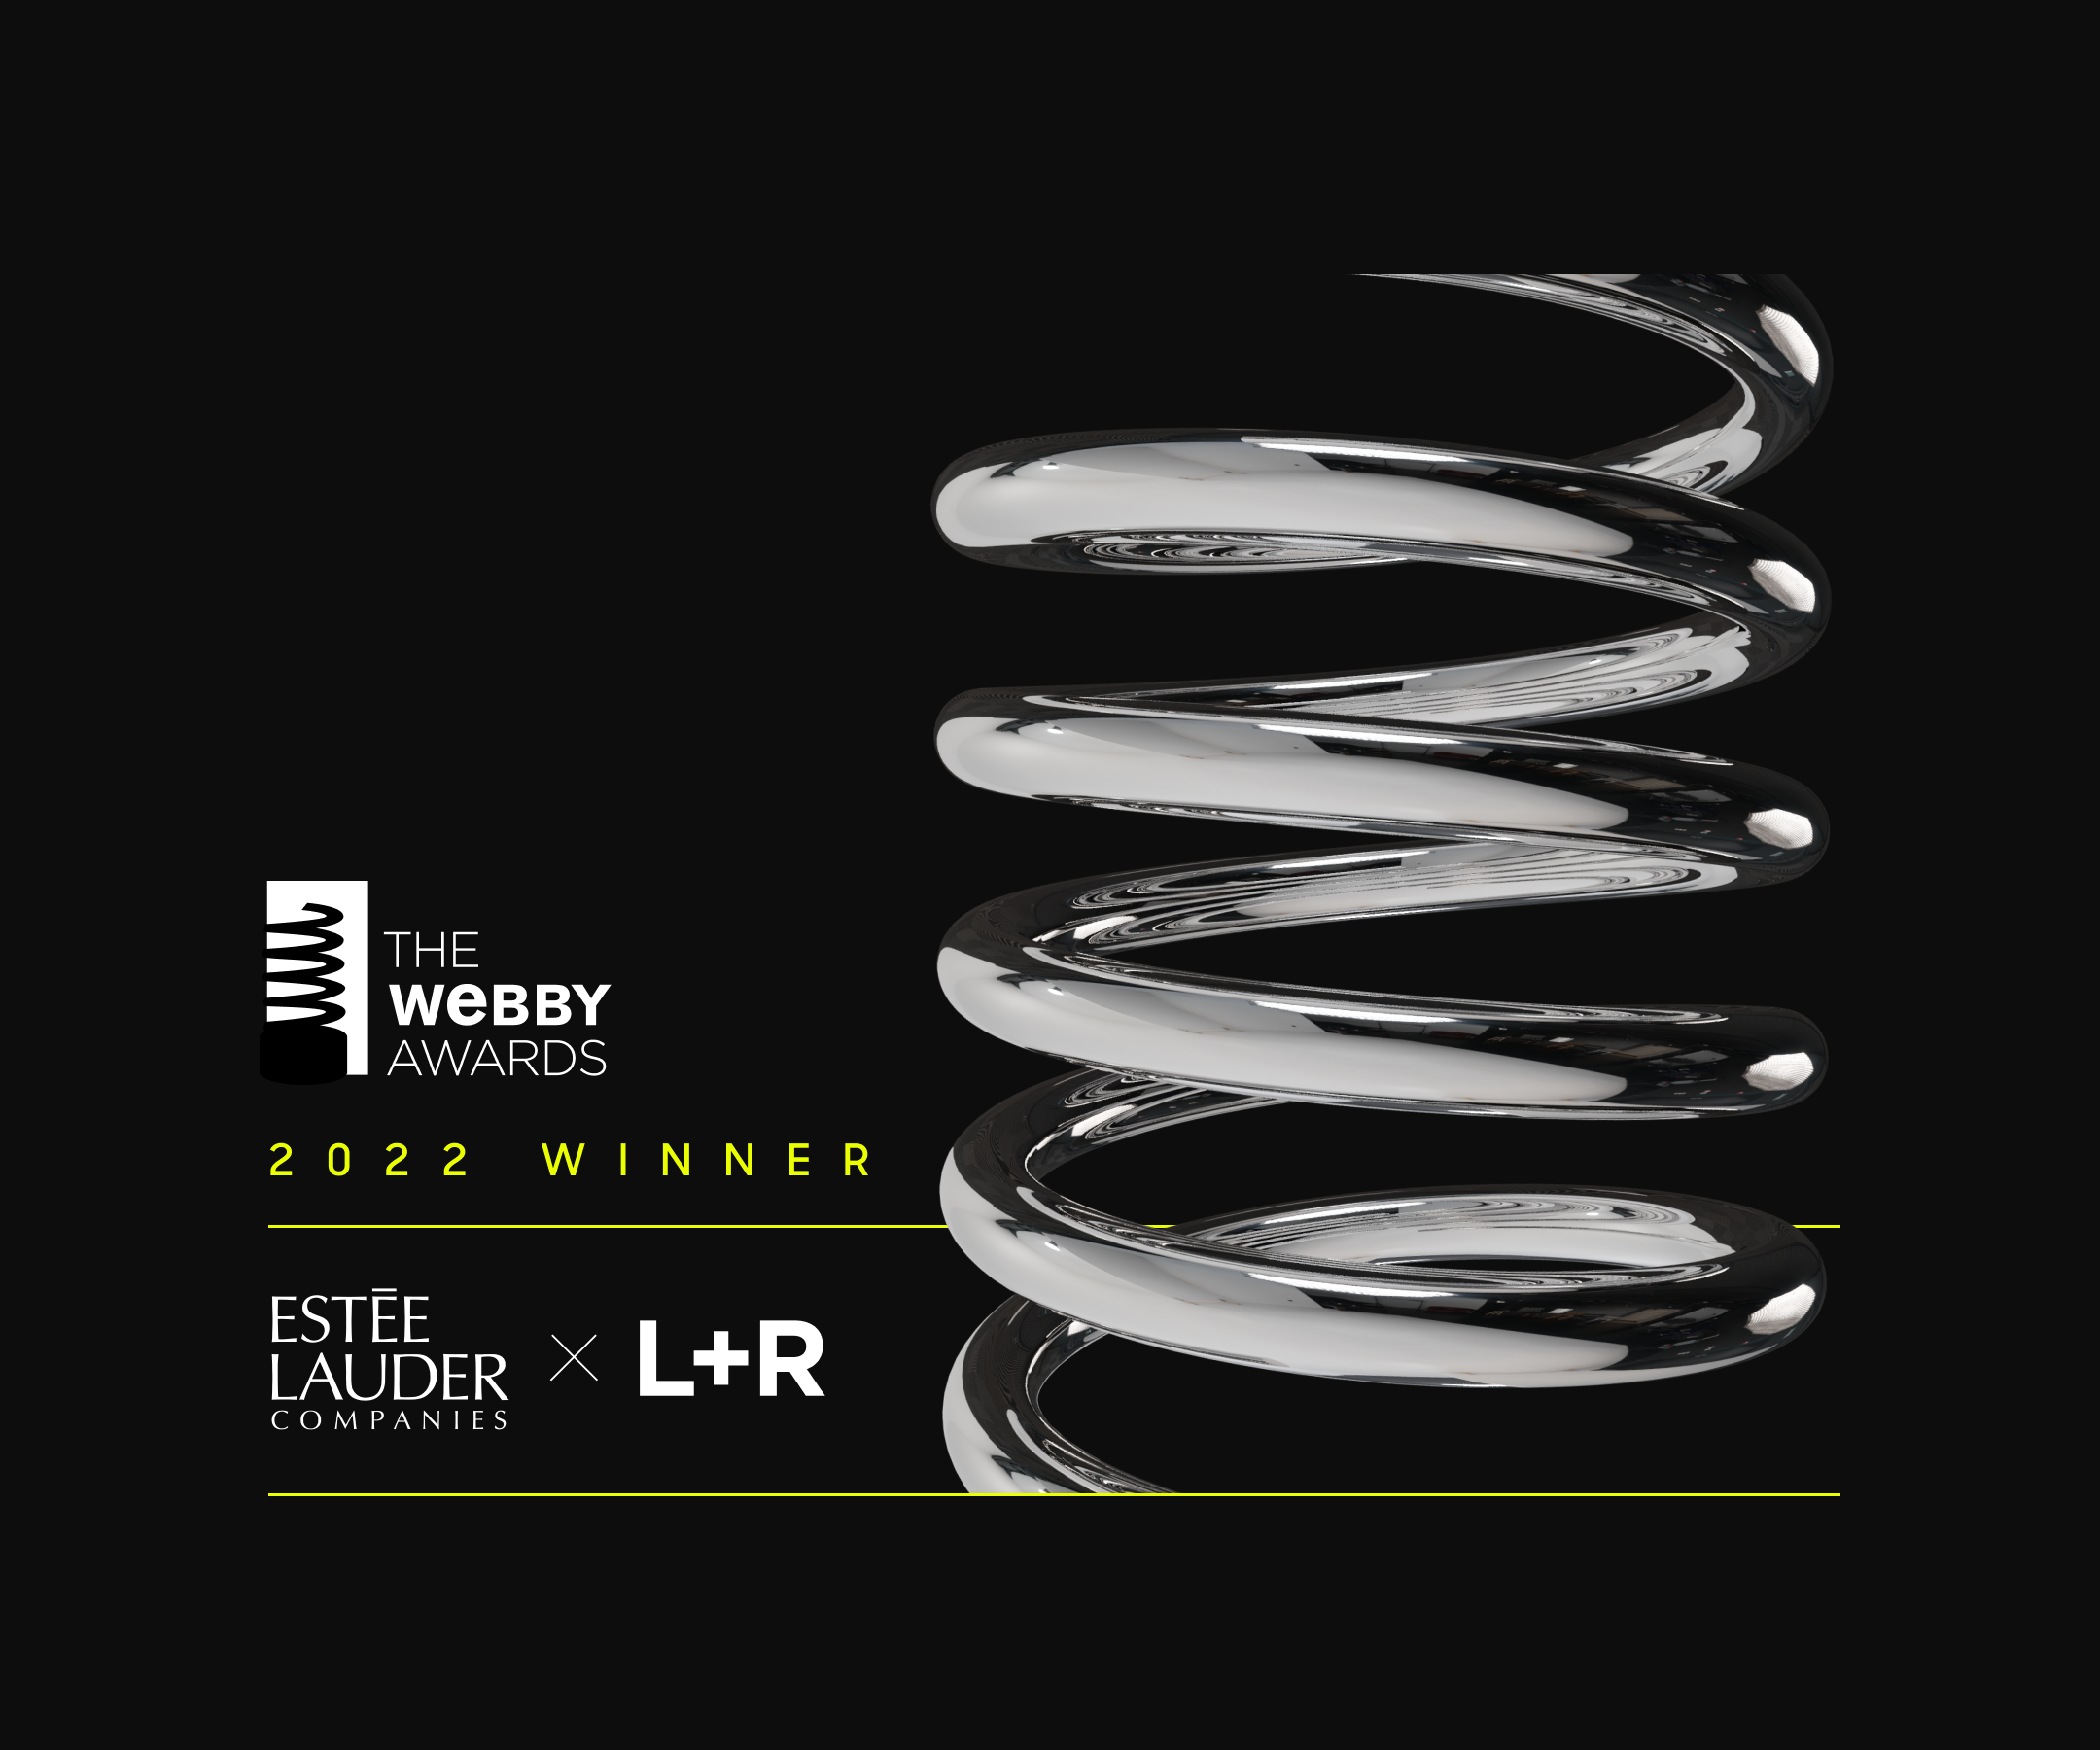 The Estée Lauder Companies is a Campus Forward Award Winner